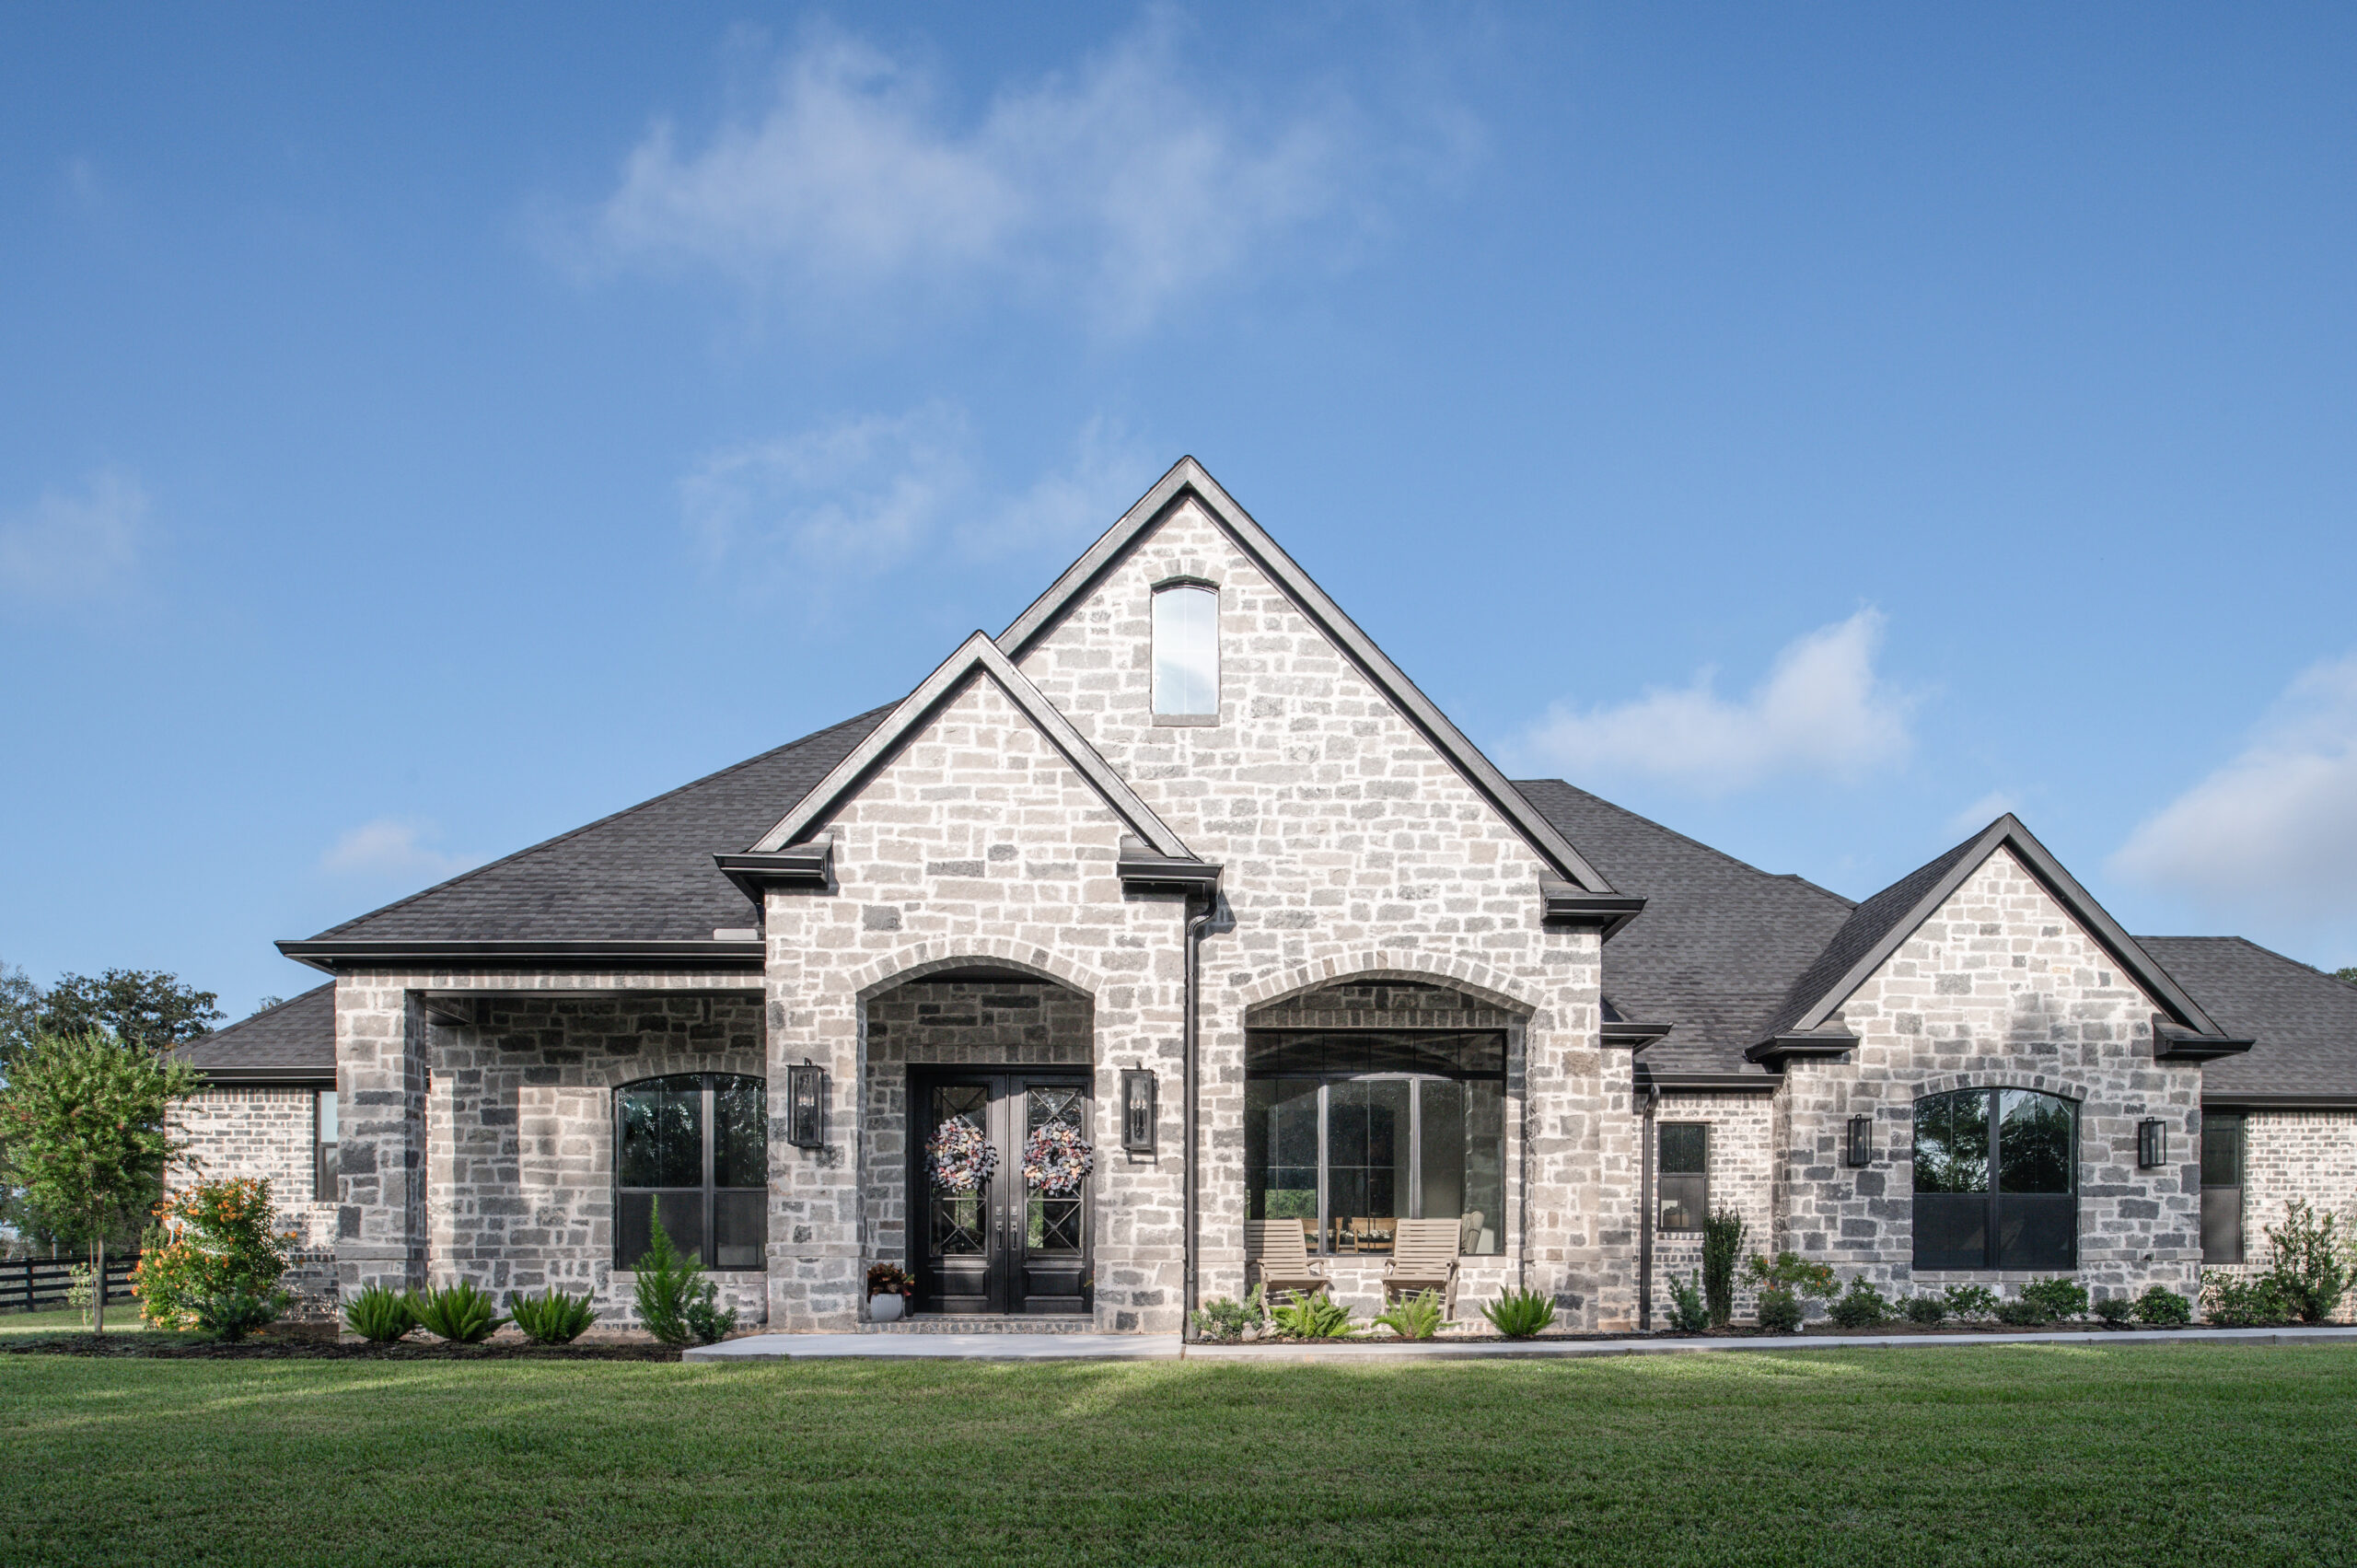 Beautiful Texas home with gray brickwork